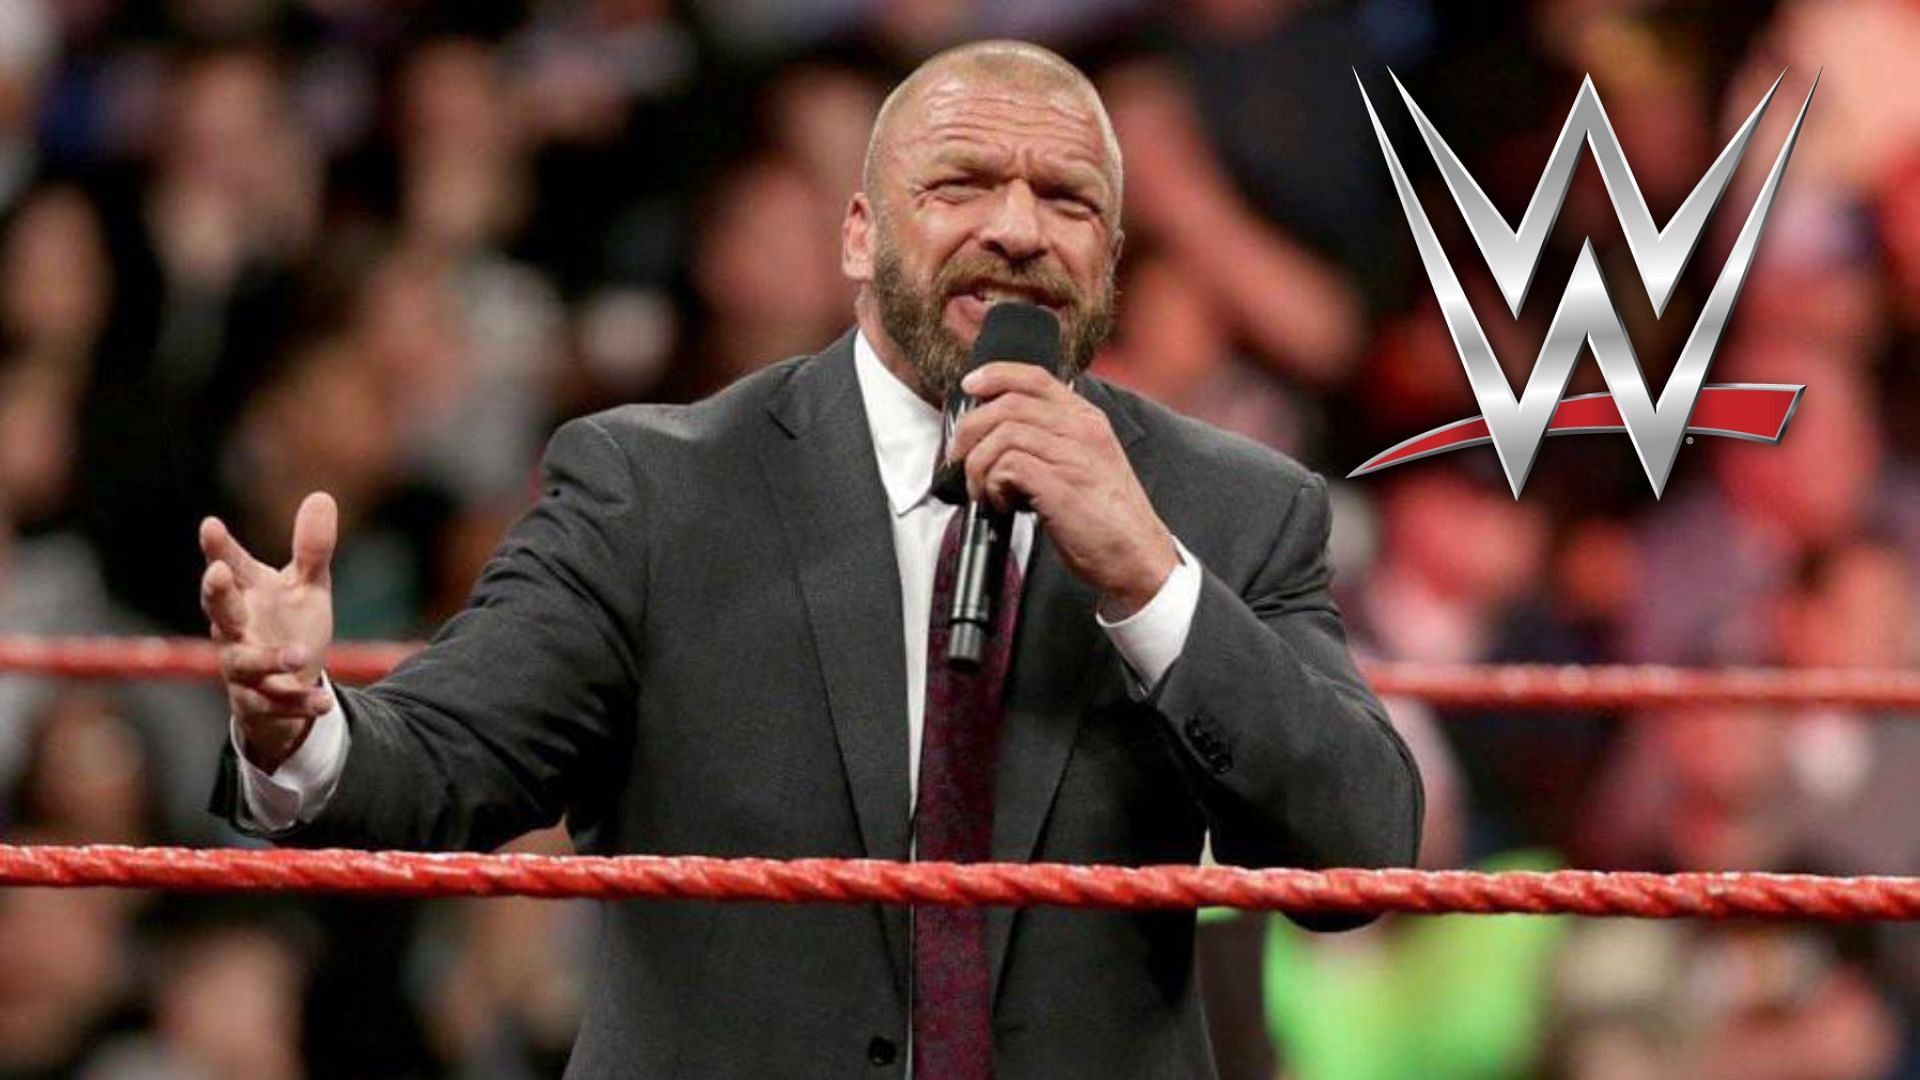 A Wrestling veteran may be headed to WWE soon